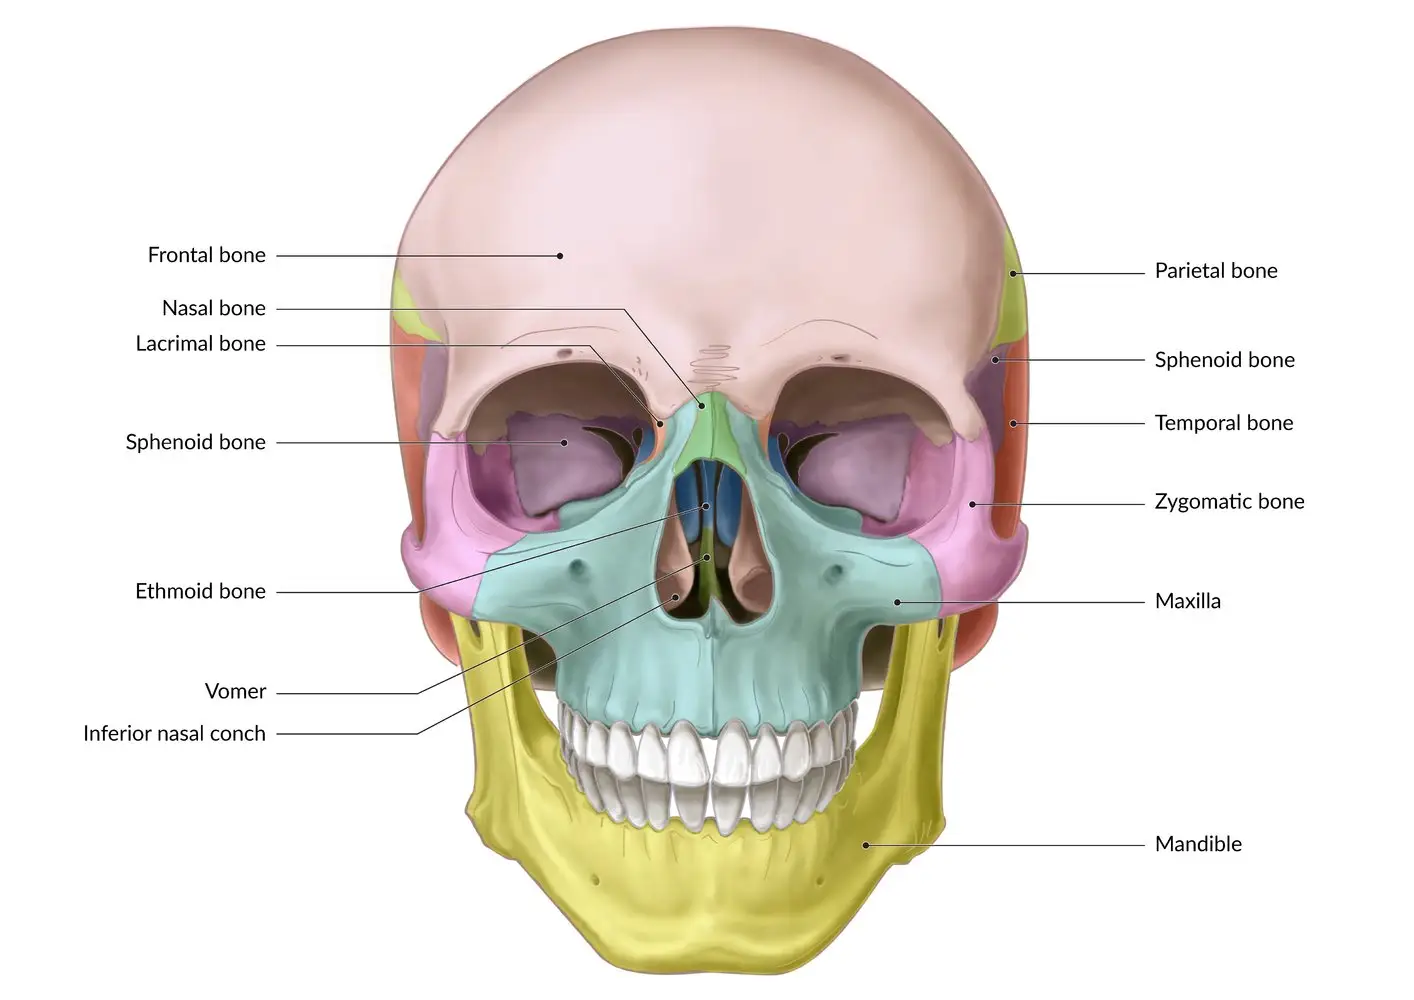 Ethmoid Bone (facial bones)